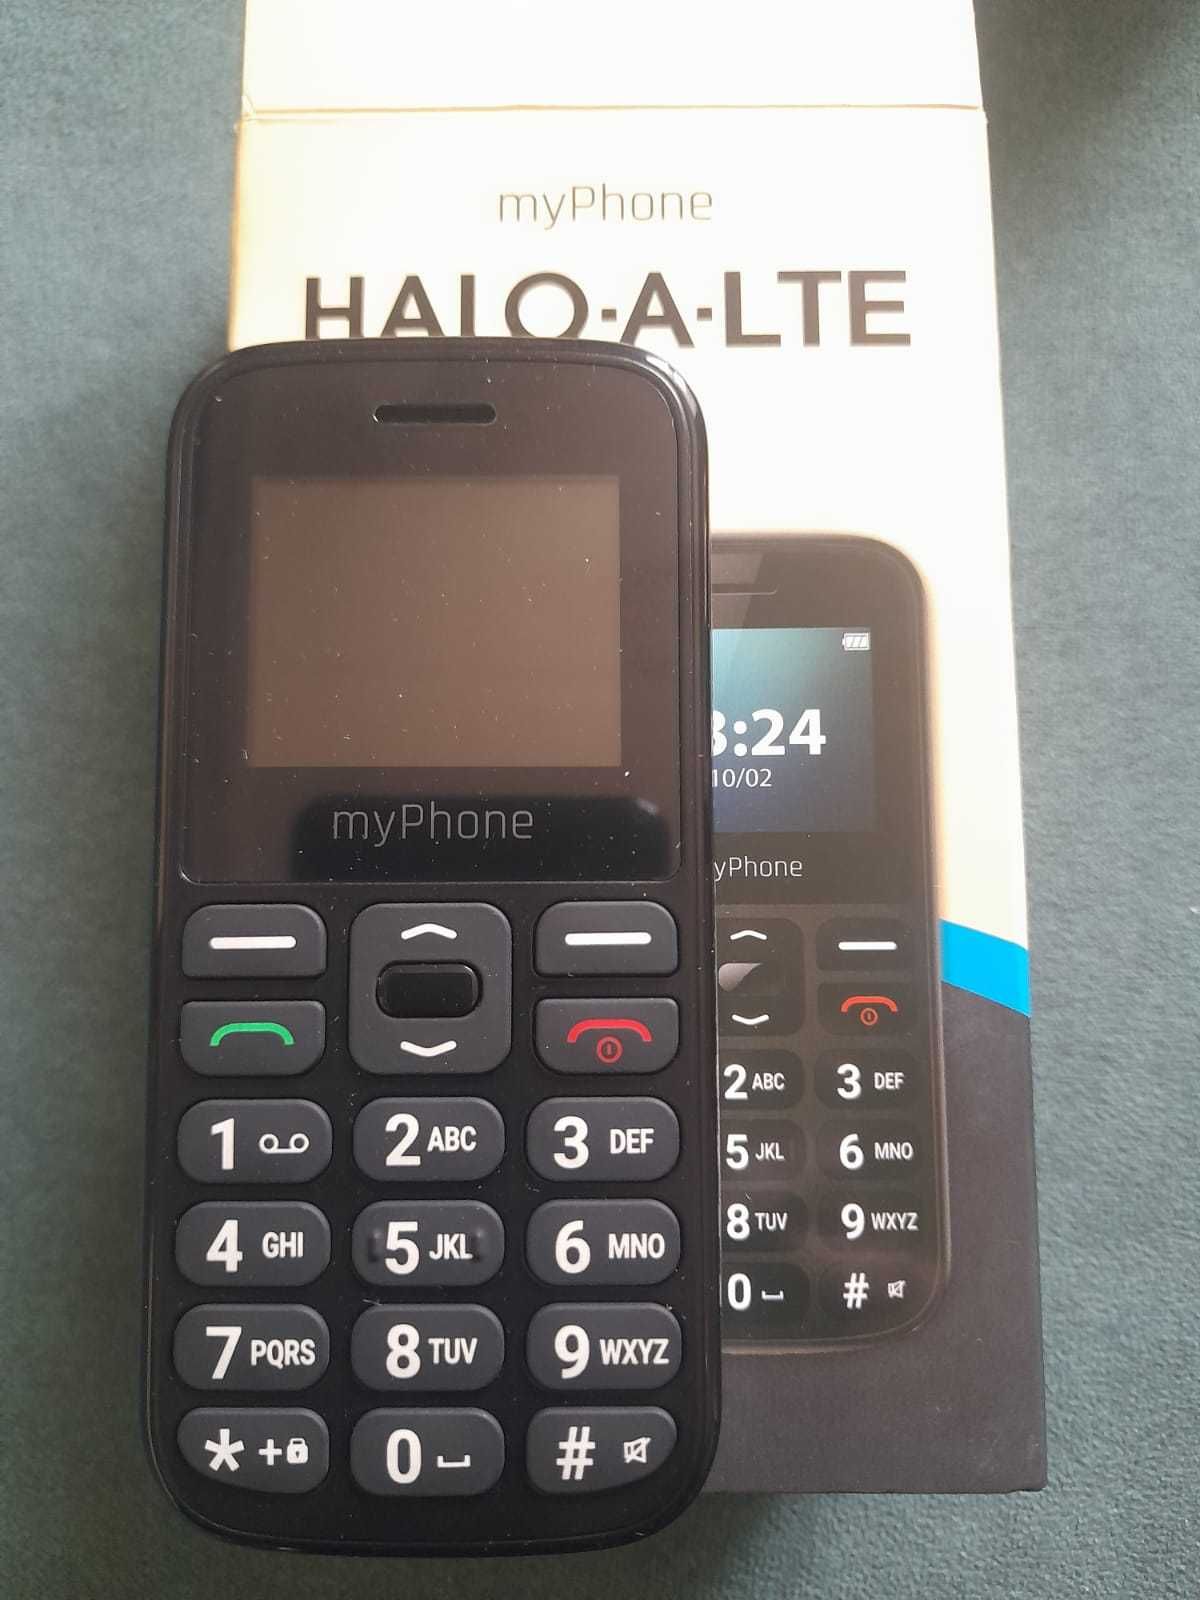 myPhone Halo - A - LTE - Nowy!!! Super cena